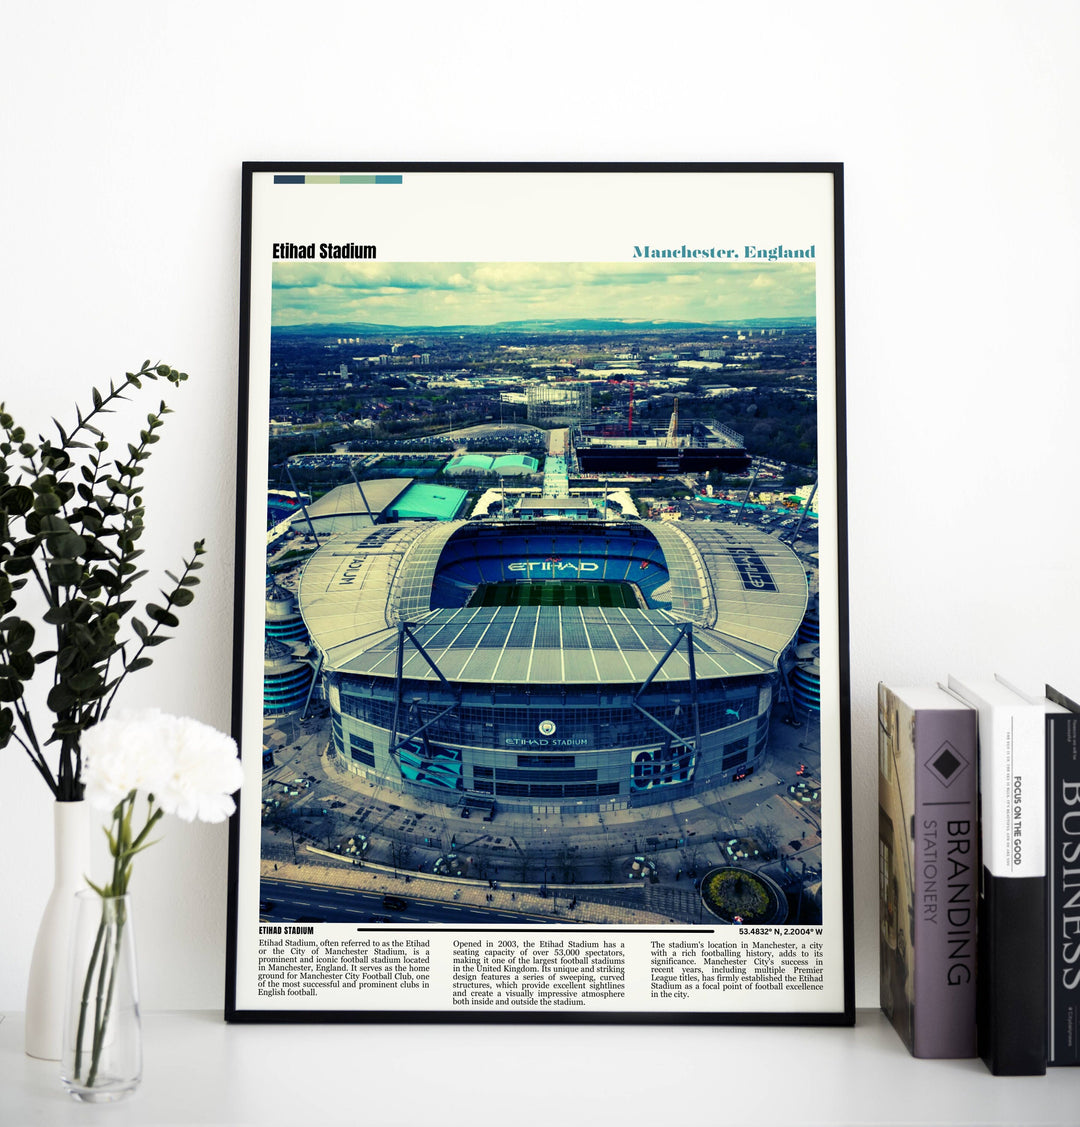 Man Citys iconic Etihad Stadium art print – the perfect Manchester City football poster and housewarming gift. Elevate your decor with this stunning Etihad Stadium art